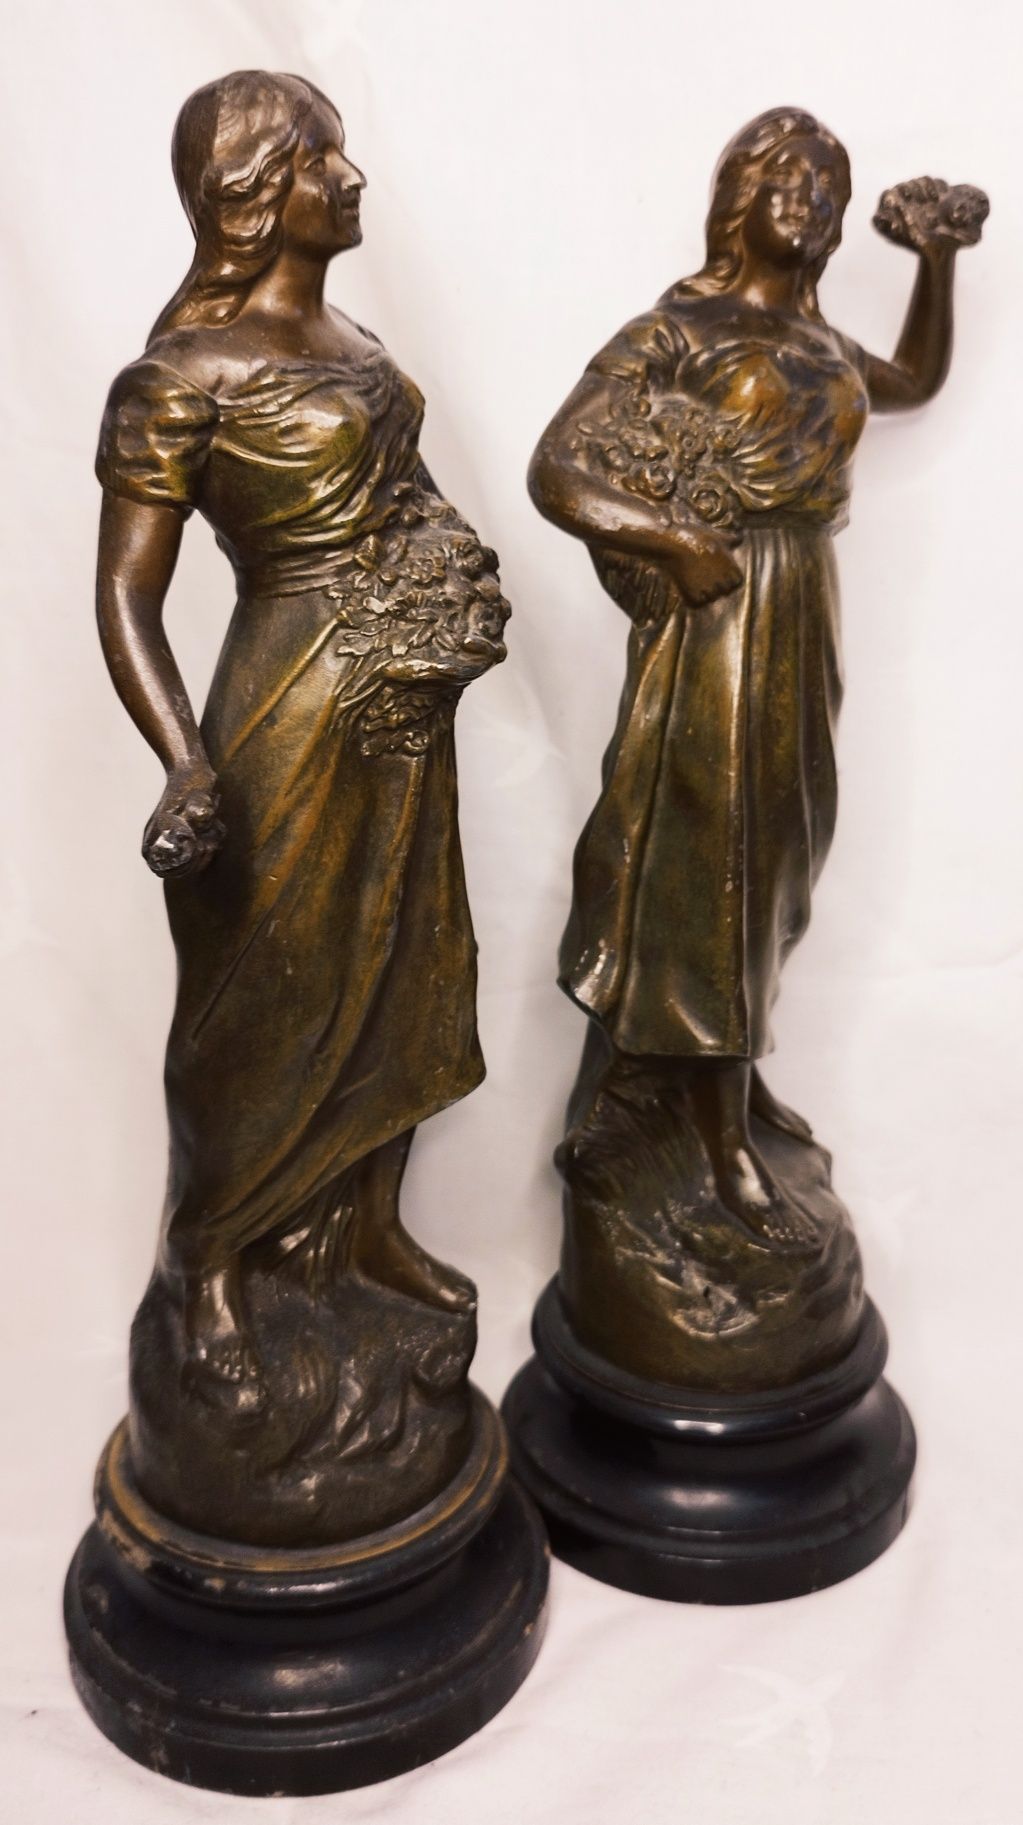 Pereche statuete vintage, antimoniu sculptate in Franta in anii 1900